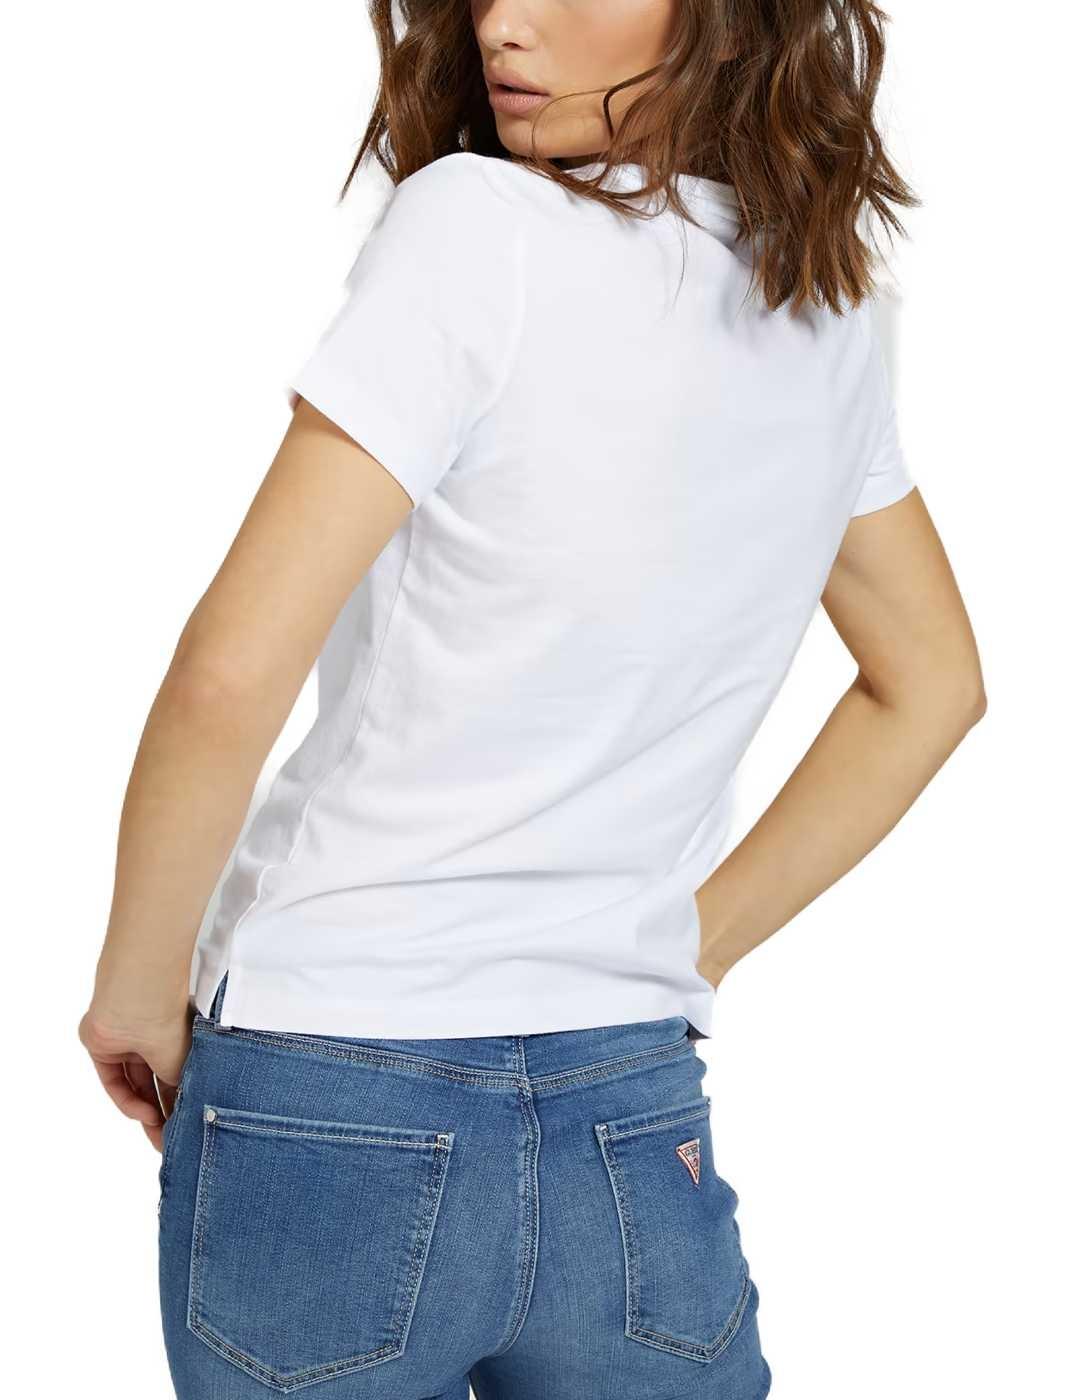 Camiseta Guess Original blanca manga corta para chica